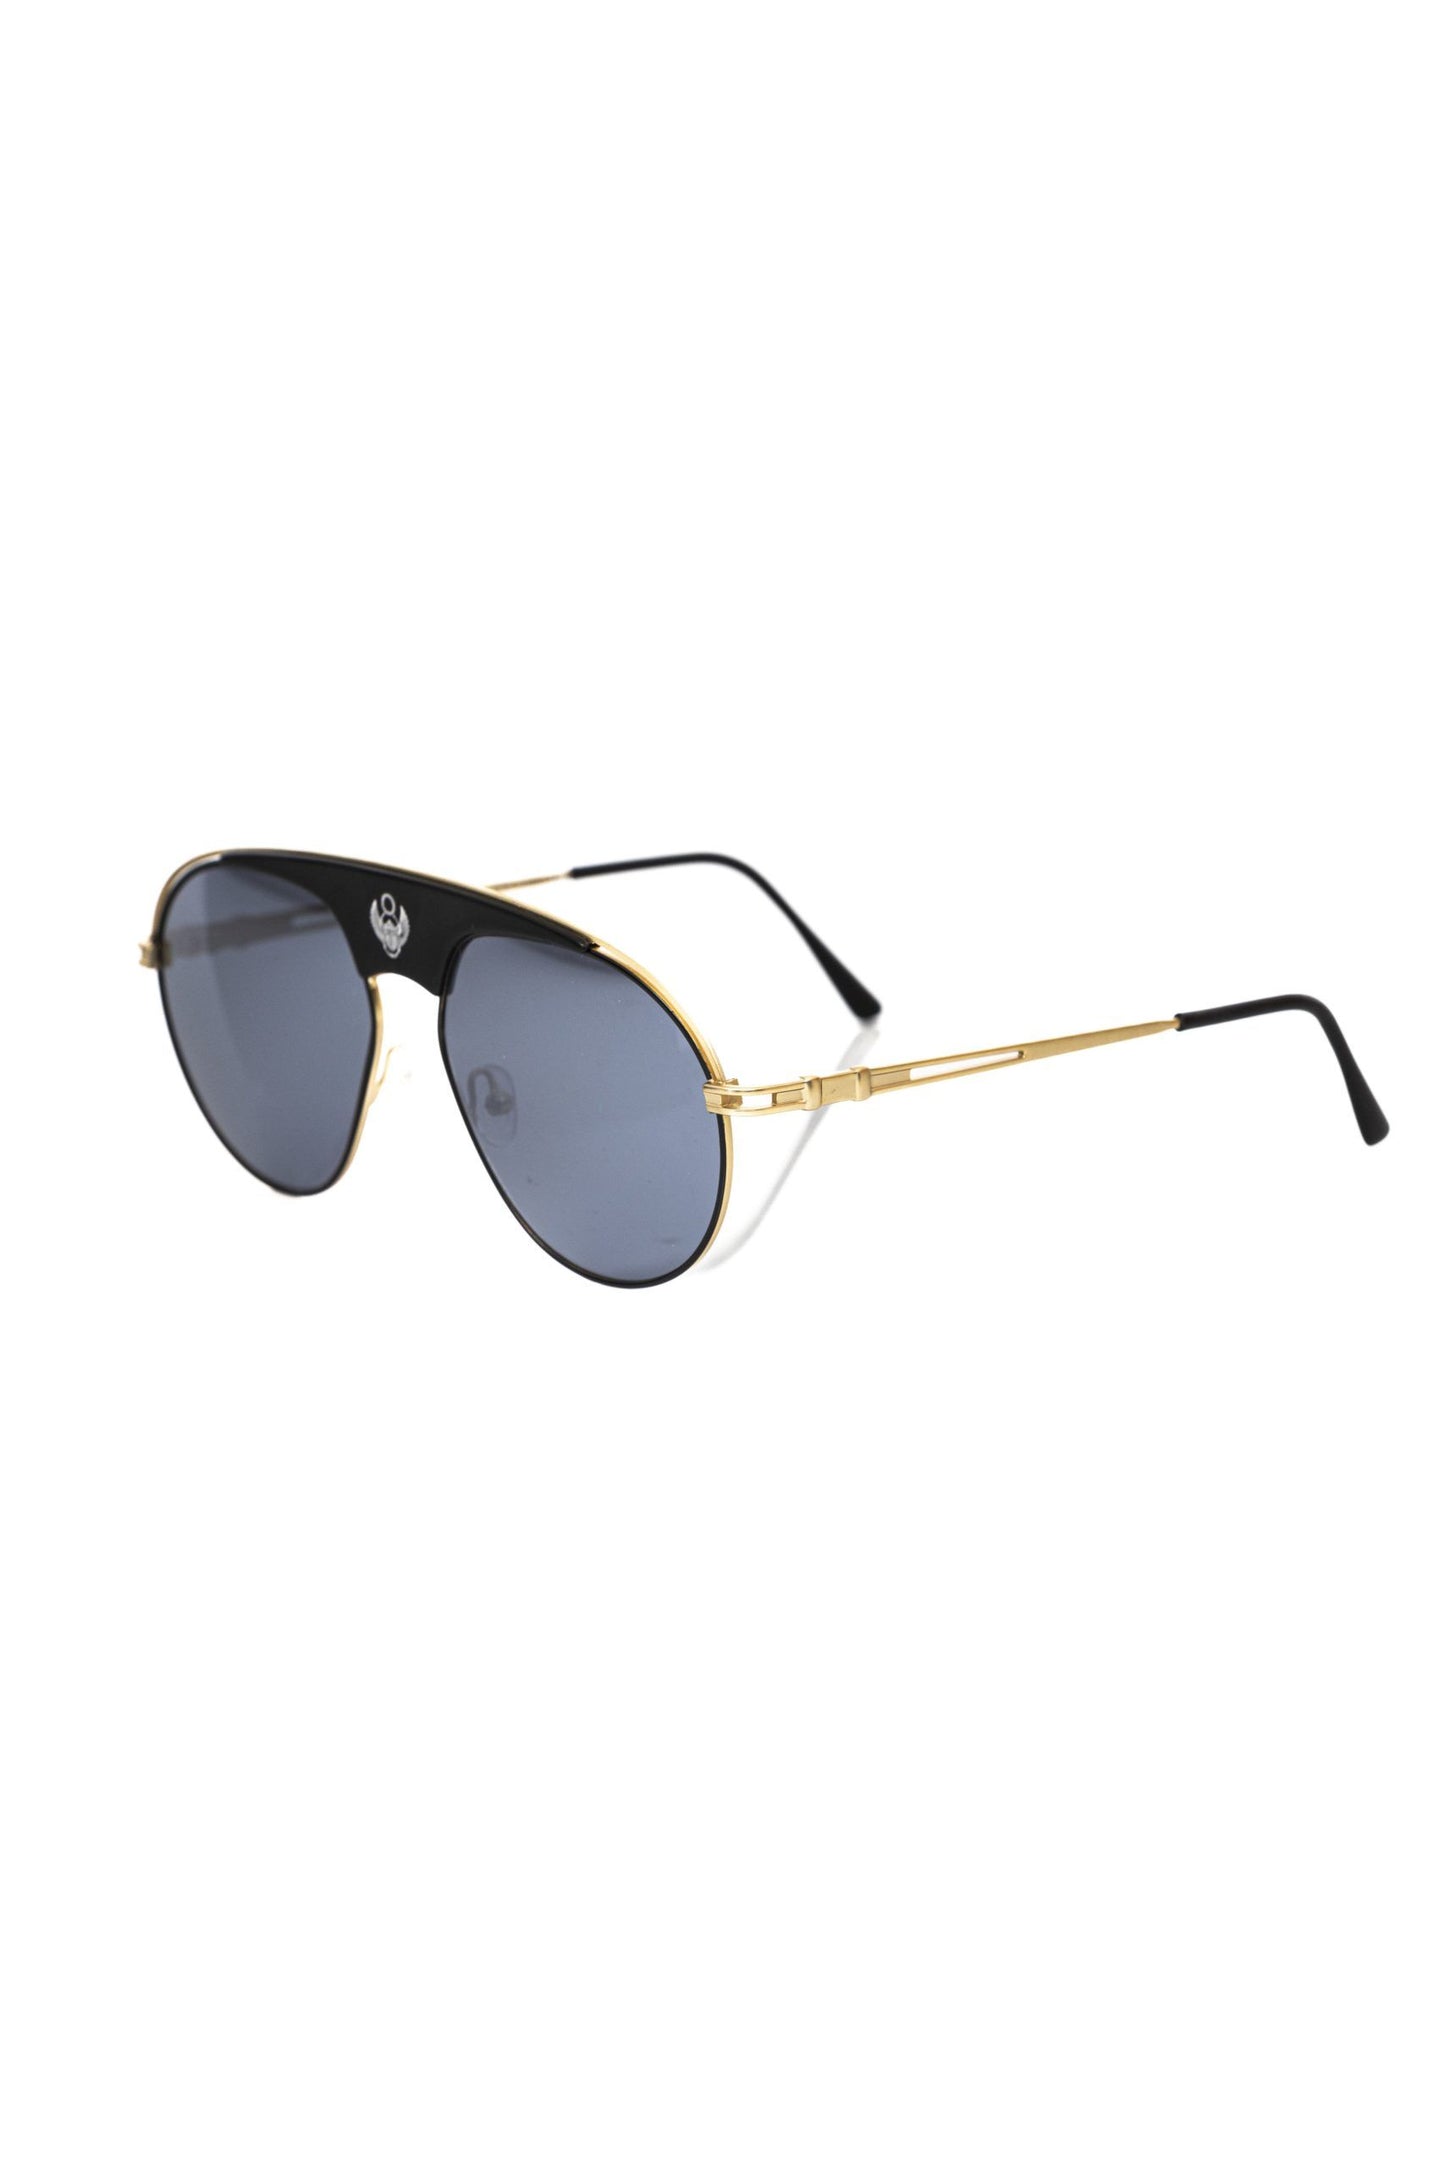 Frankie Morello FRMO-22124 Black Metallic Fibre Sunglasses